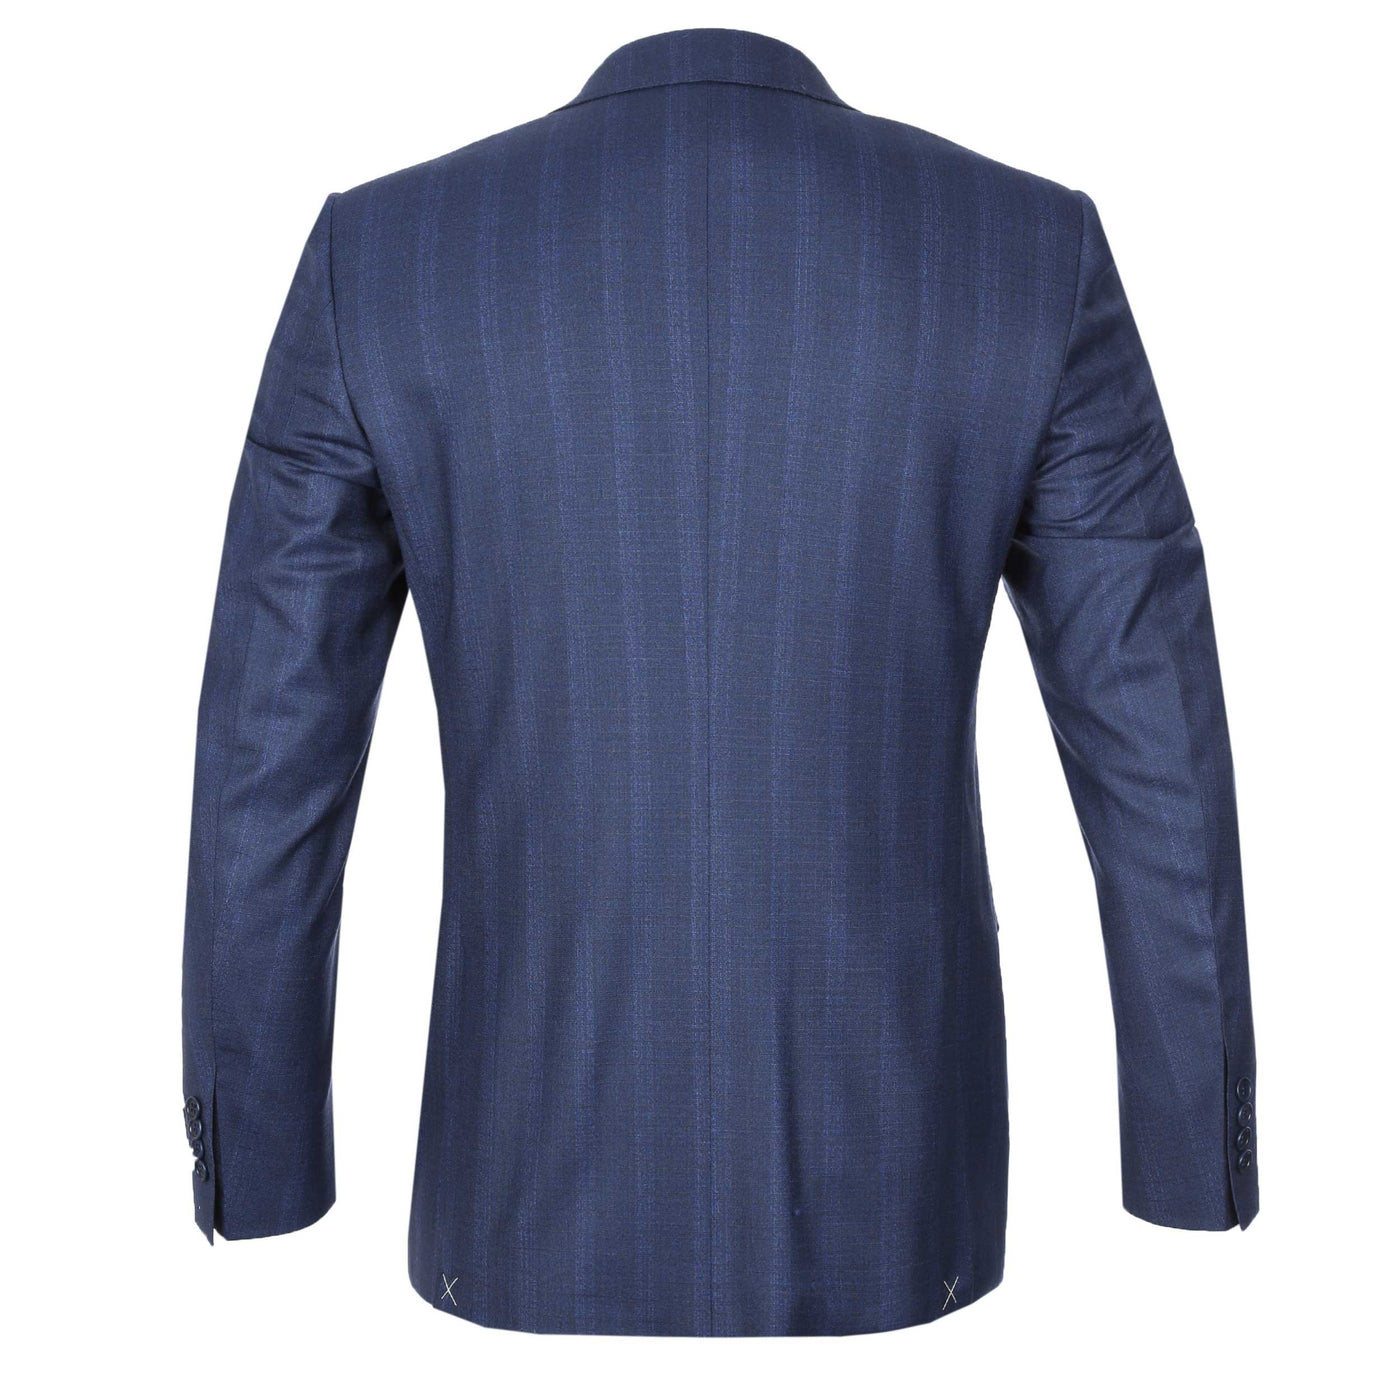 Canali Peak Lapel Milano Suit in Navy Blue Jacket Back